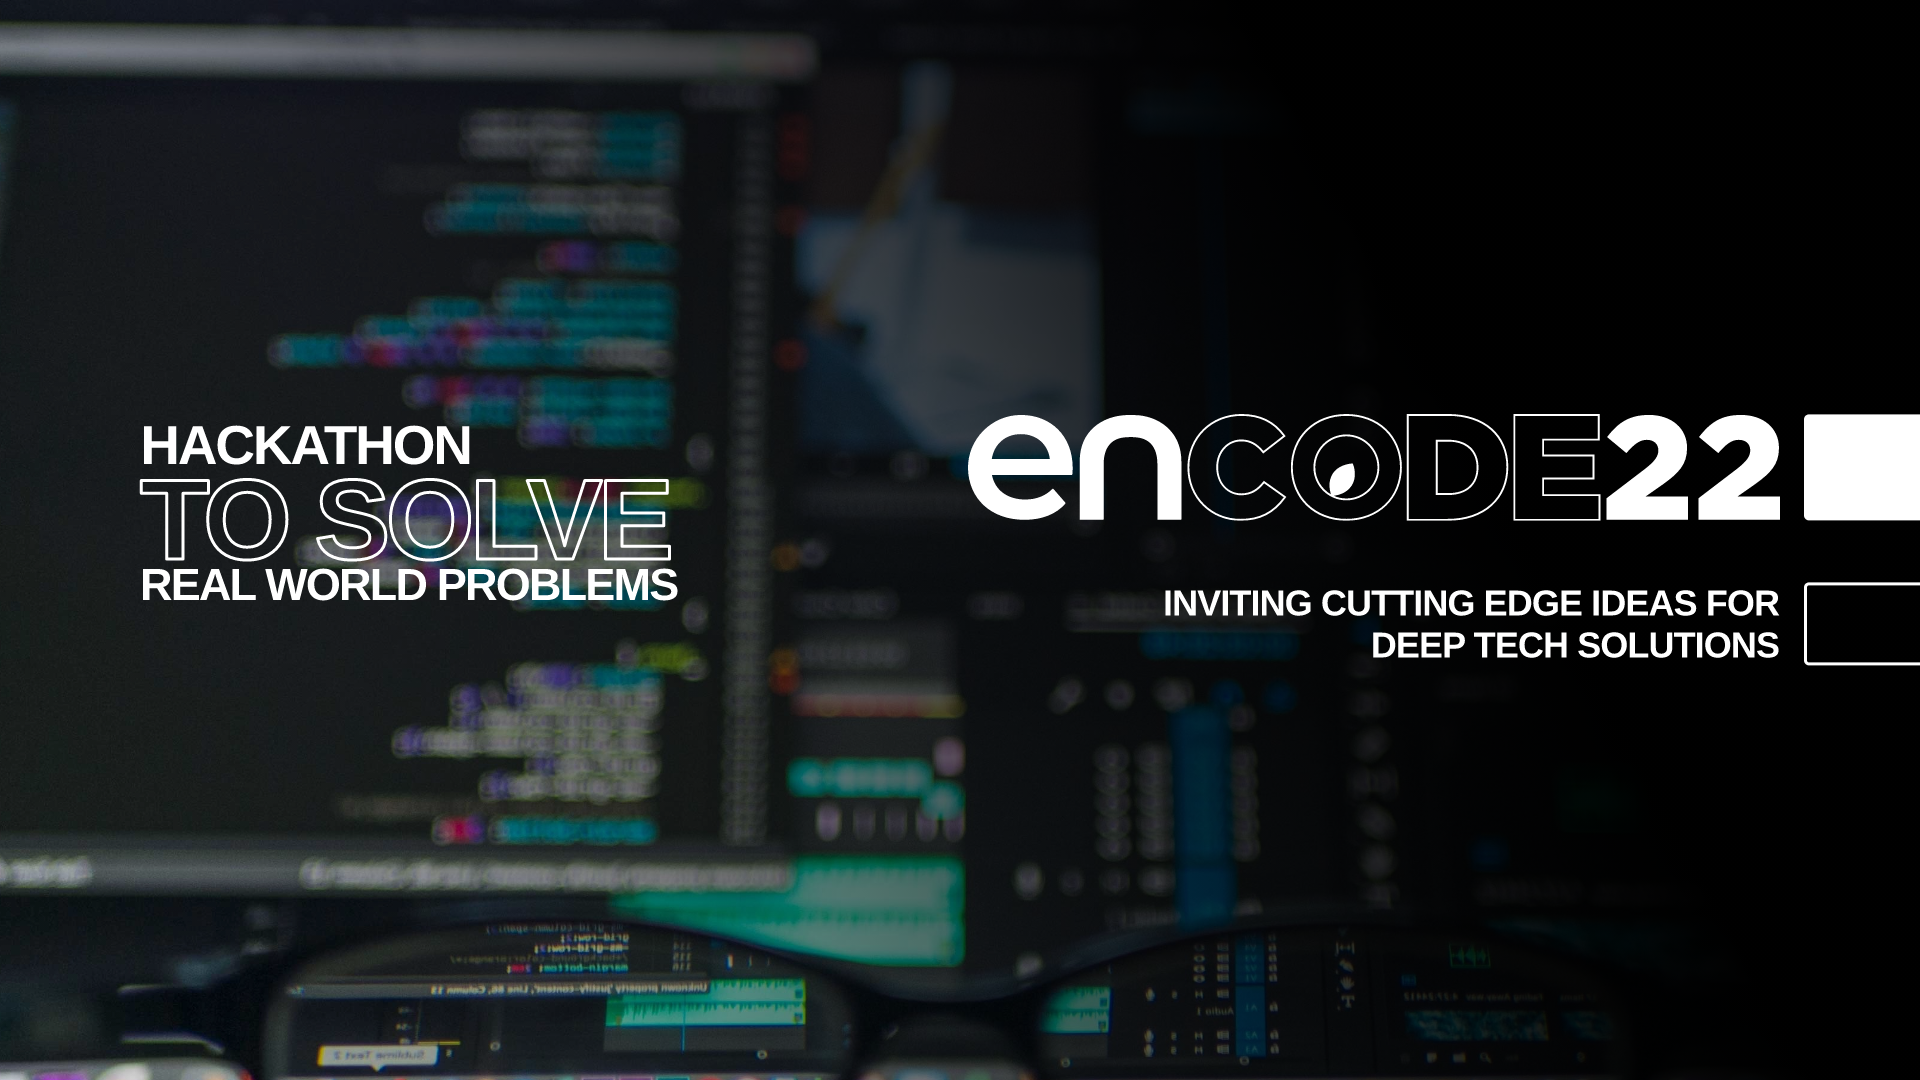 Encode 22 Event Banner Image